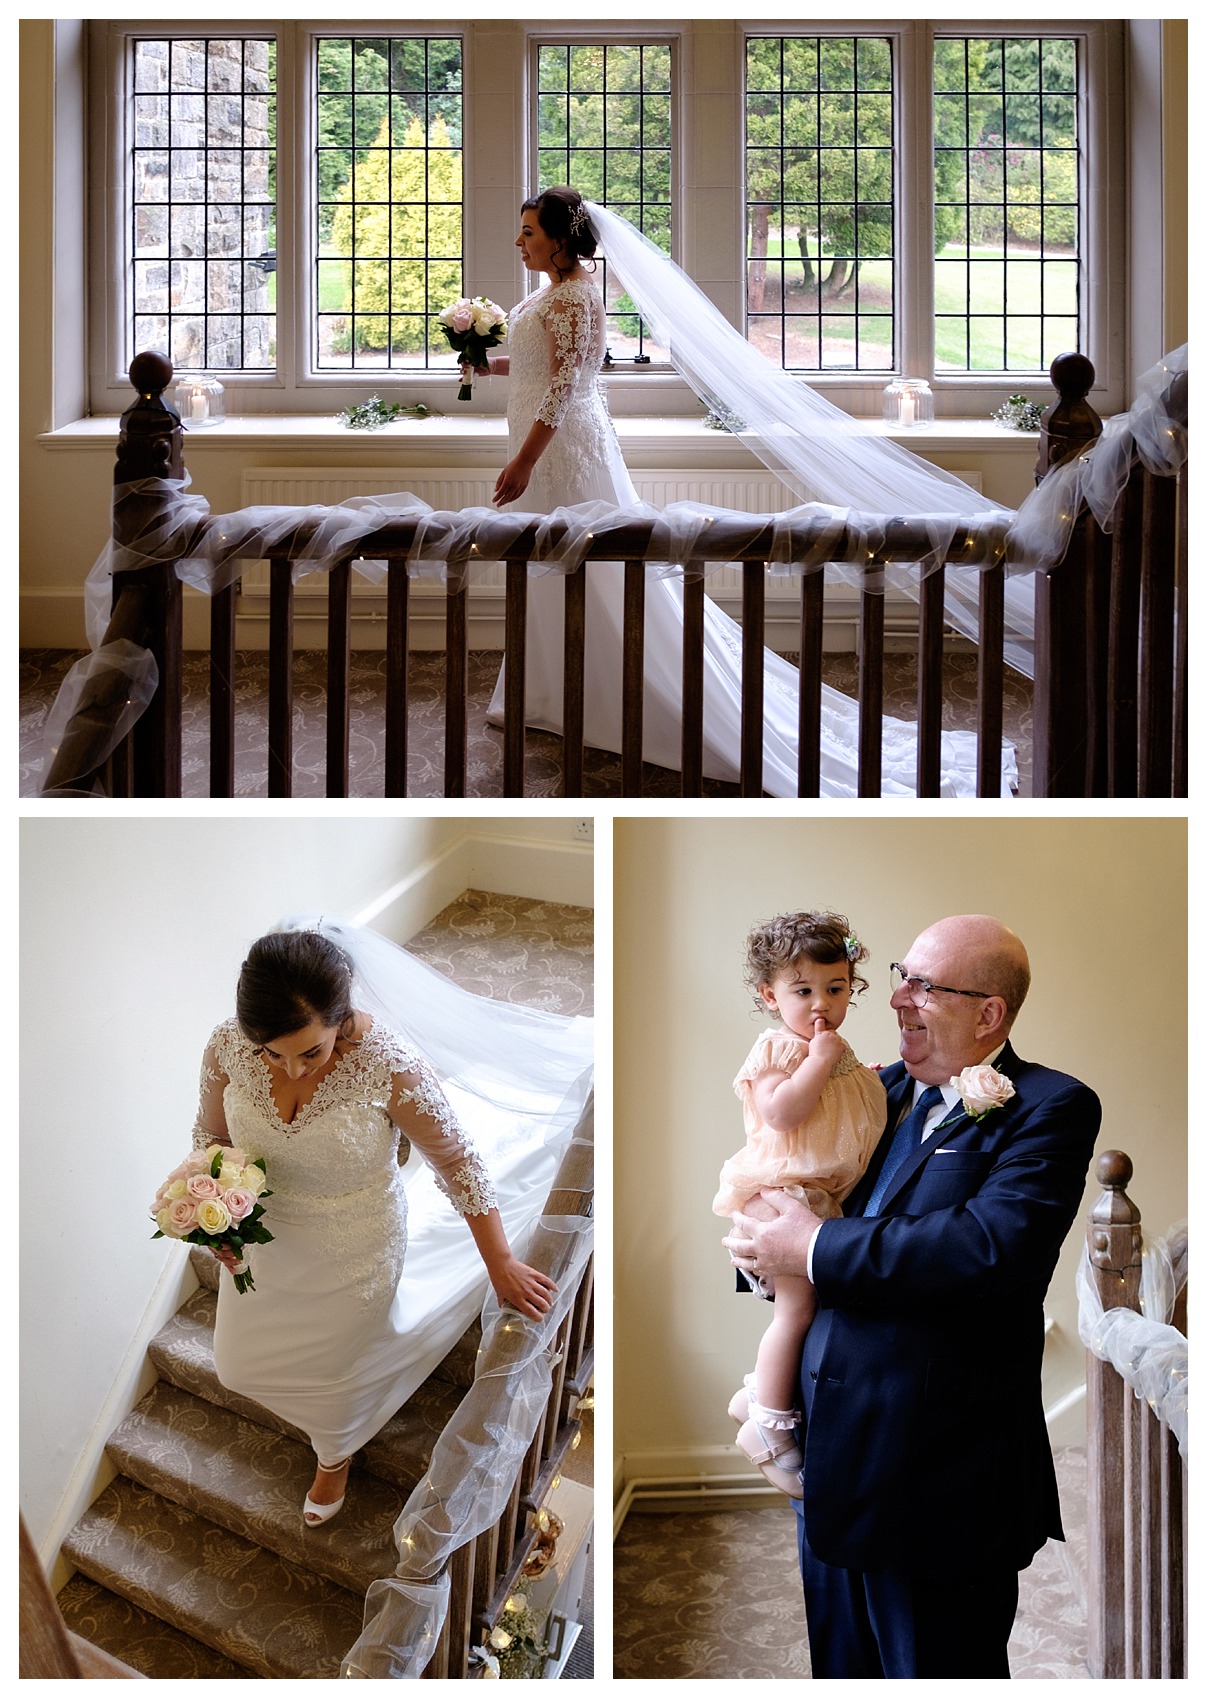 Whirlowbrook Hall wedding by Sheffield qwedding photographer Chris Loneragan 051700007